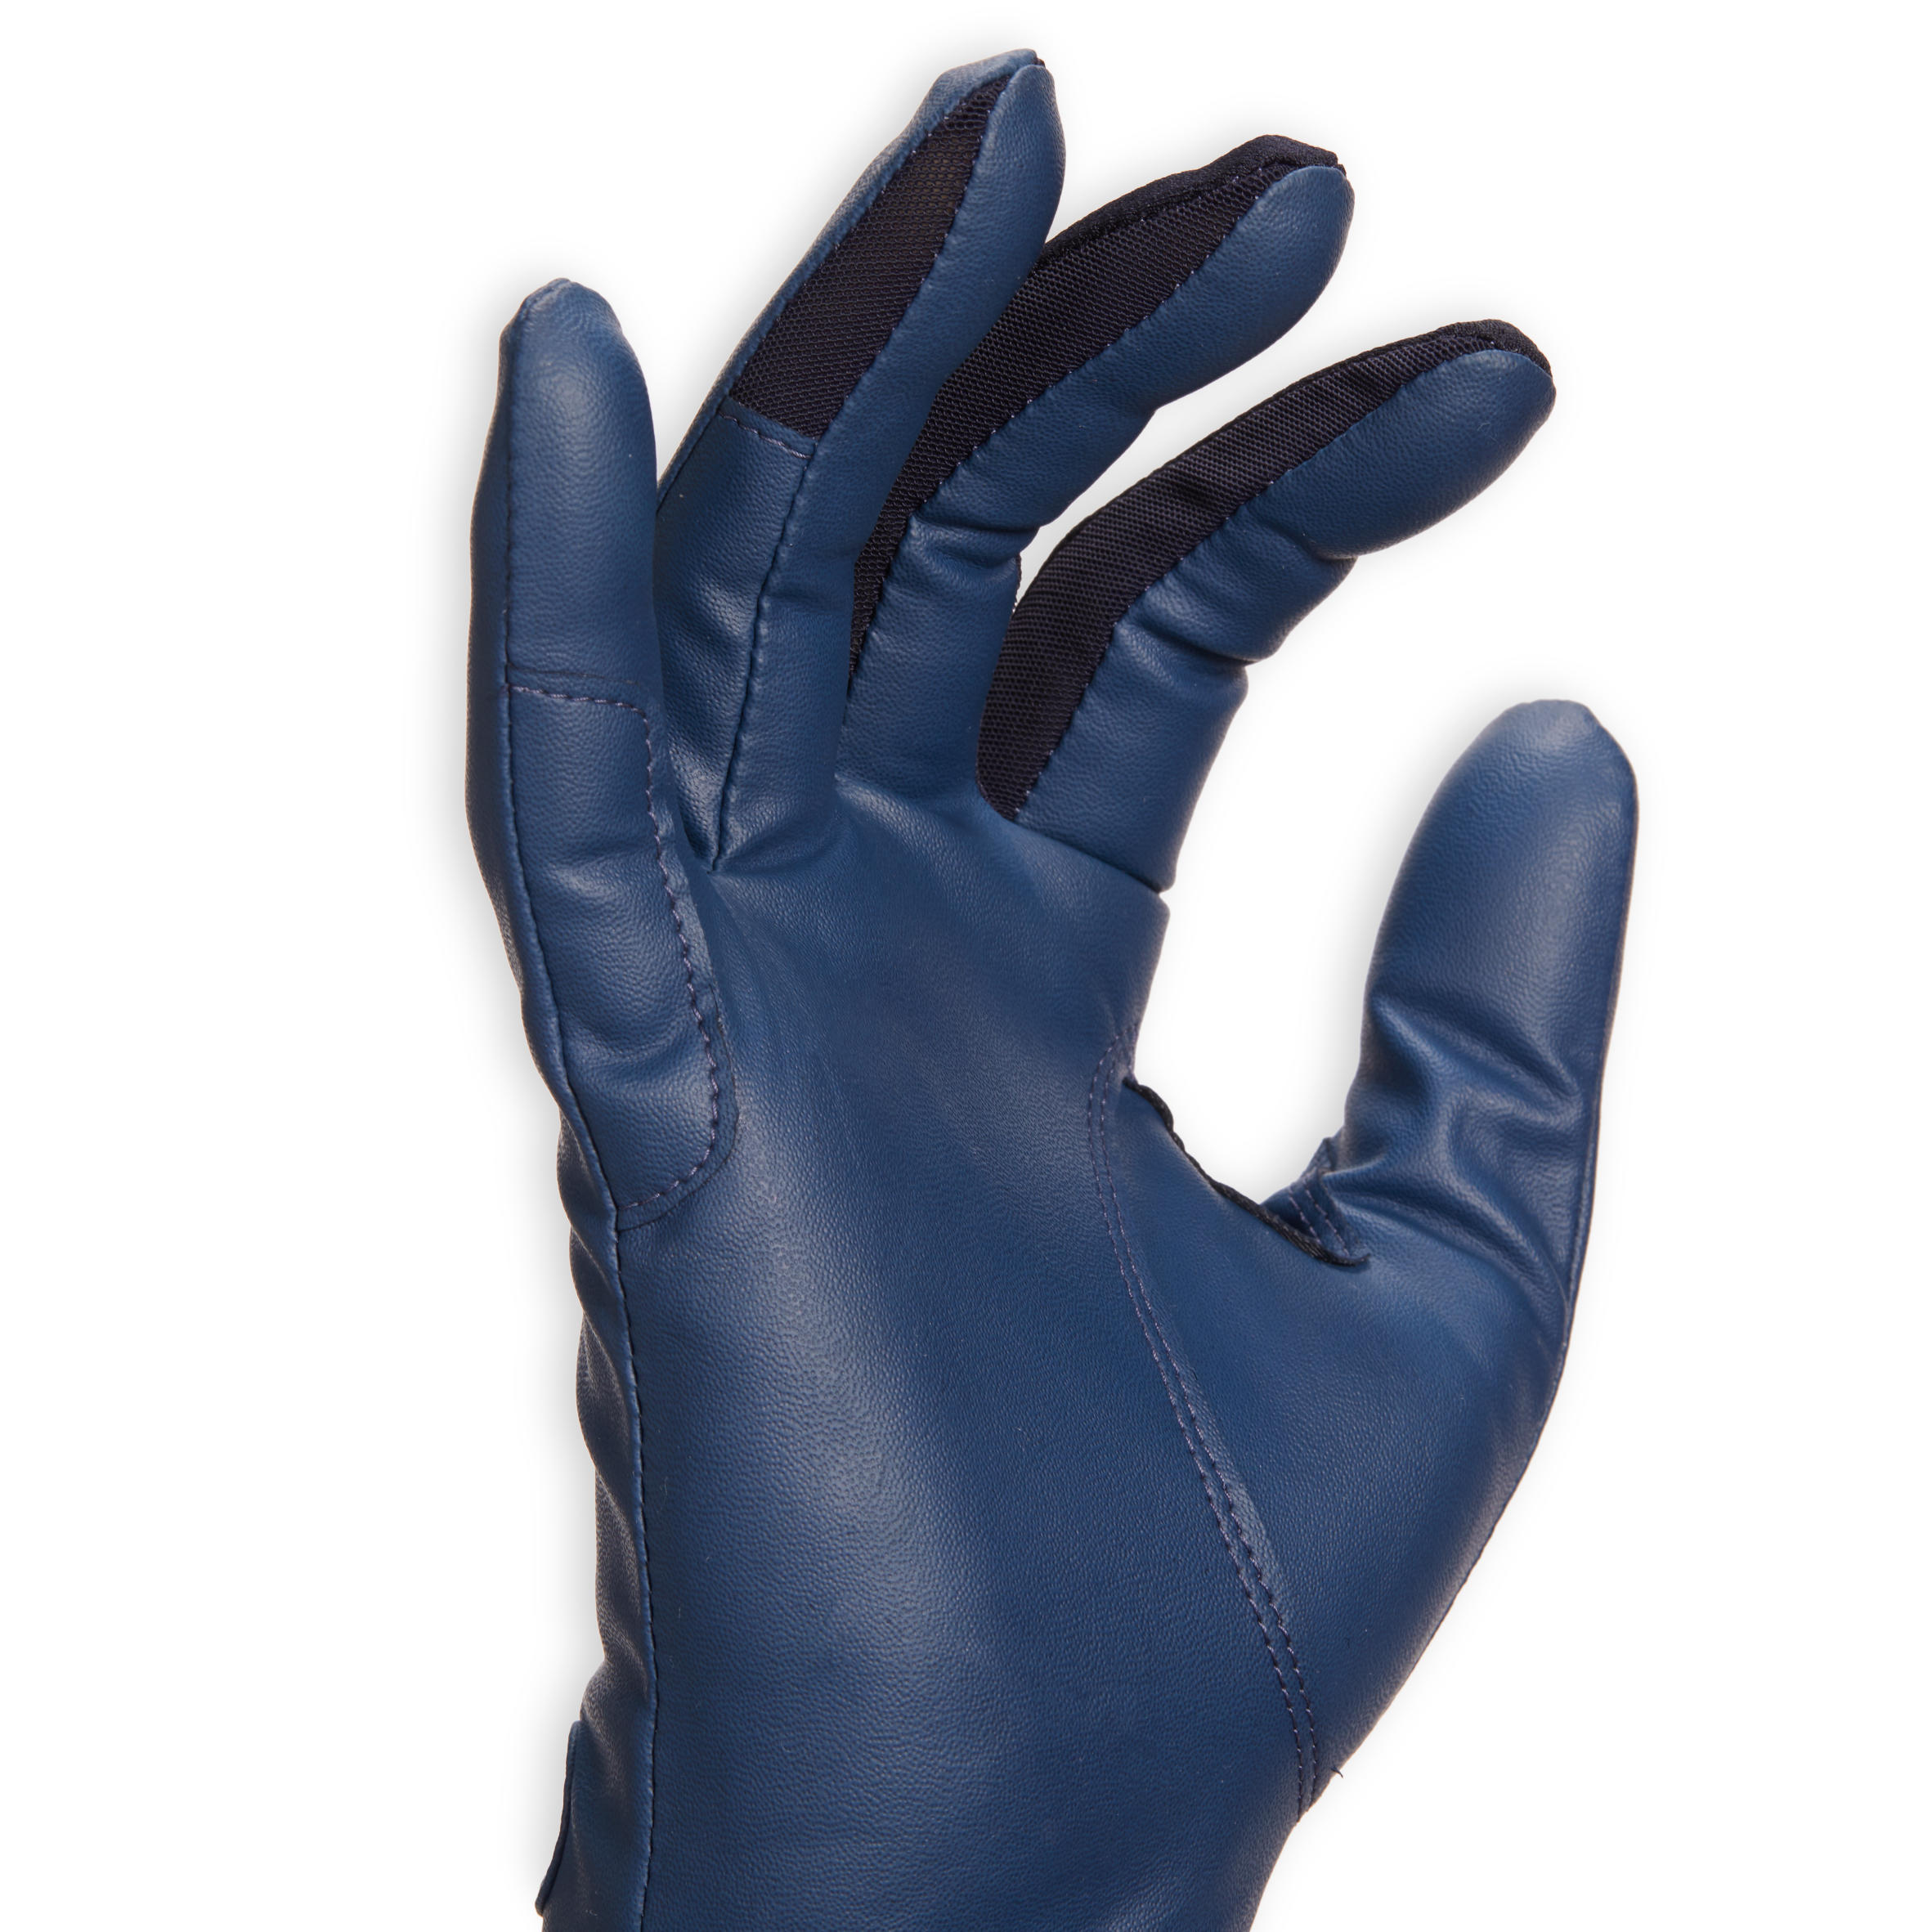 560 Horse Riding Gloves - Navy/Blue 7/7